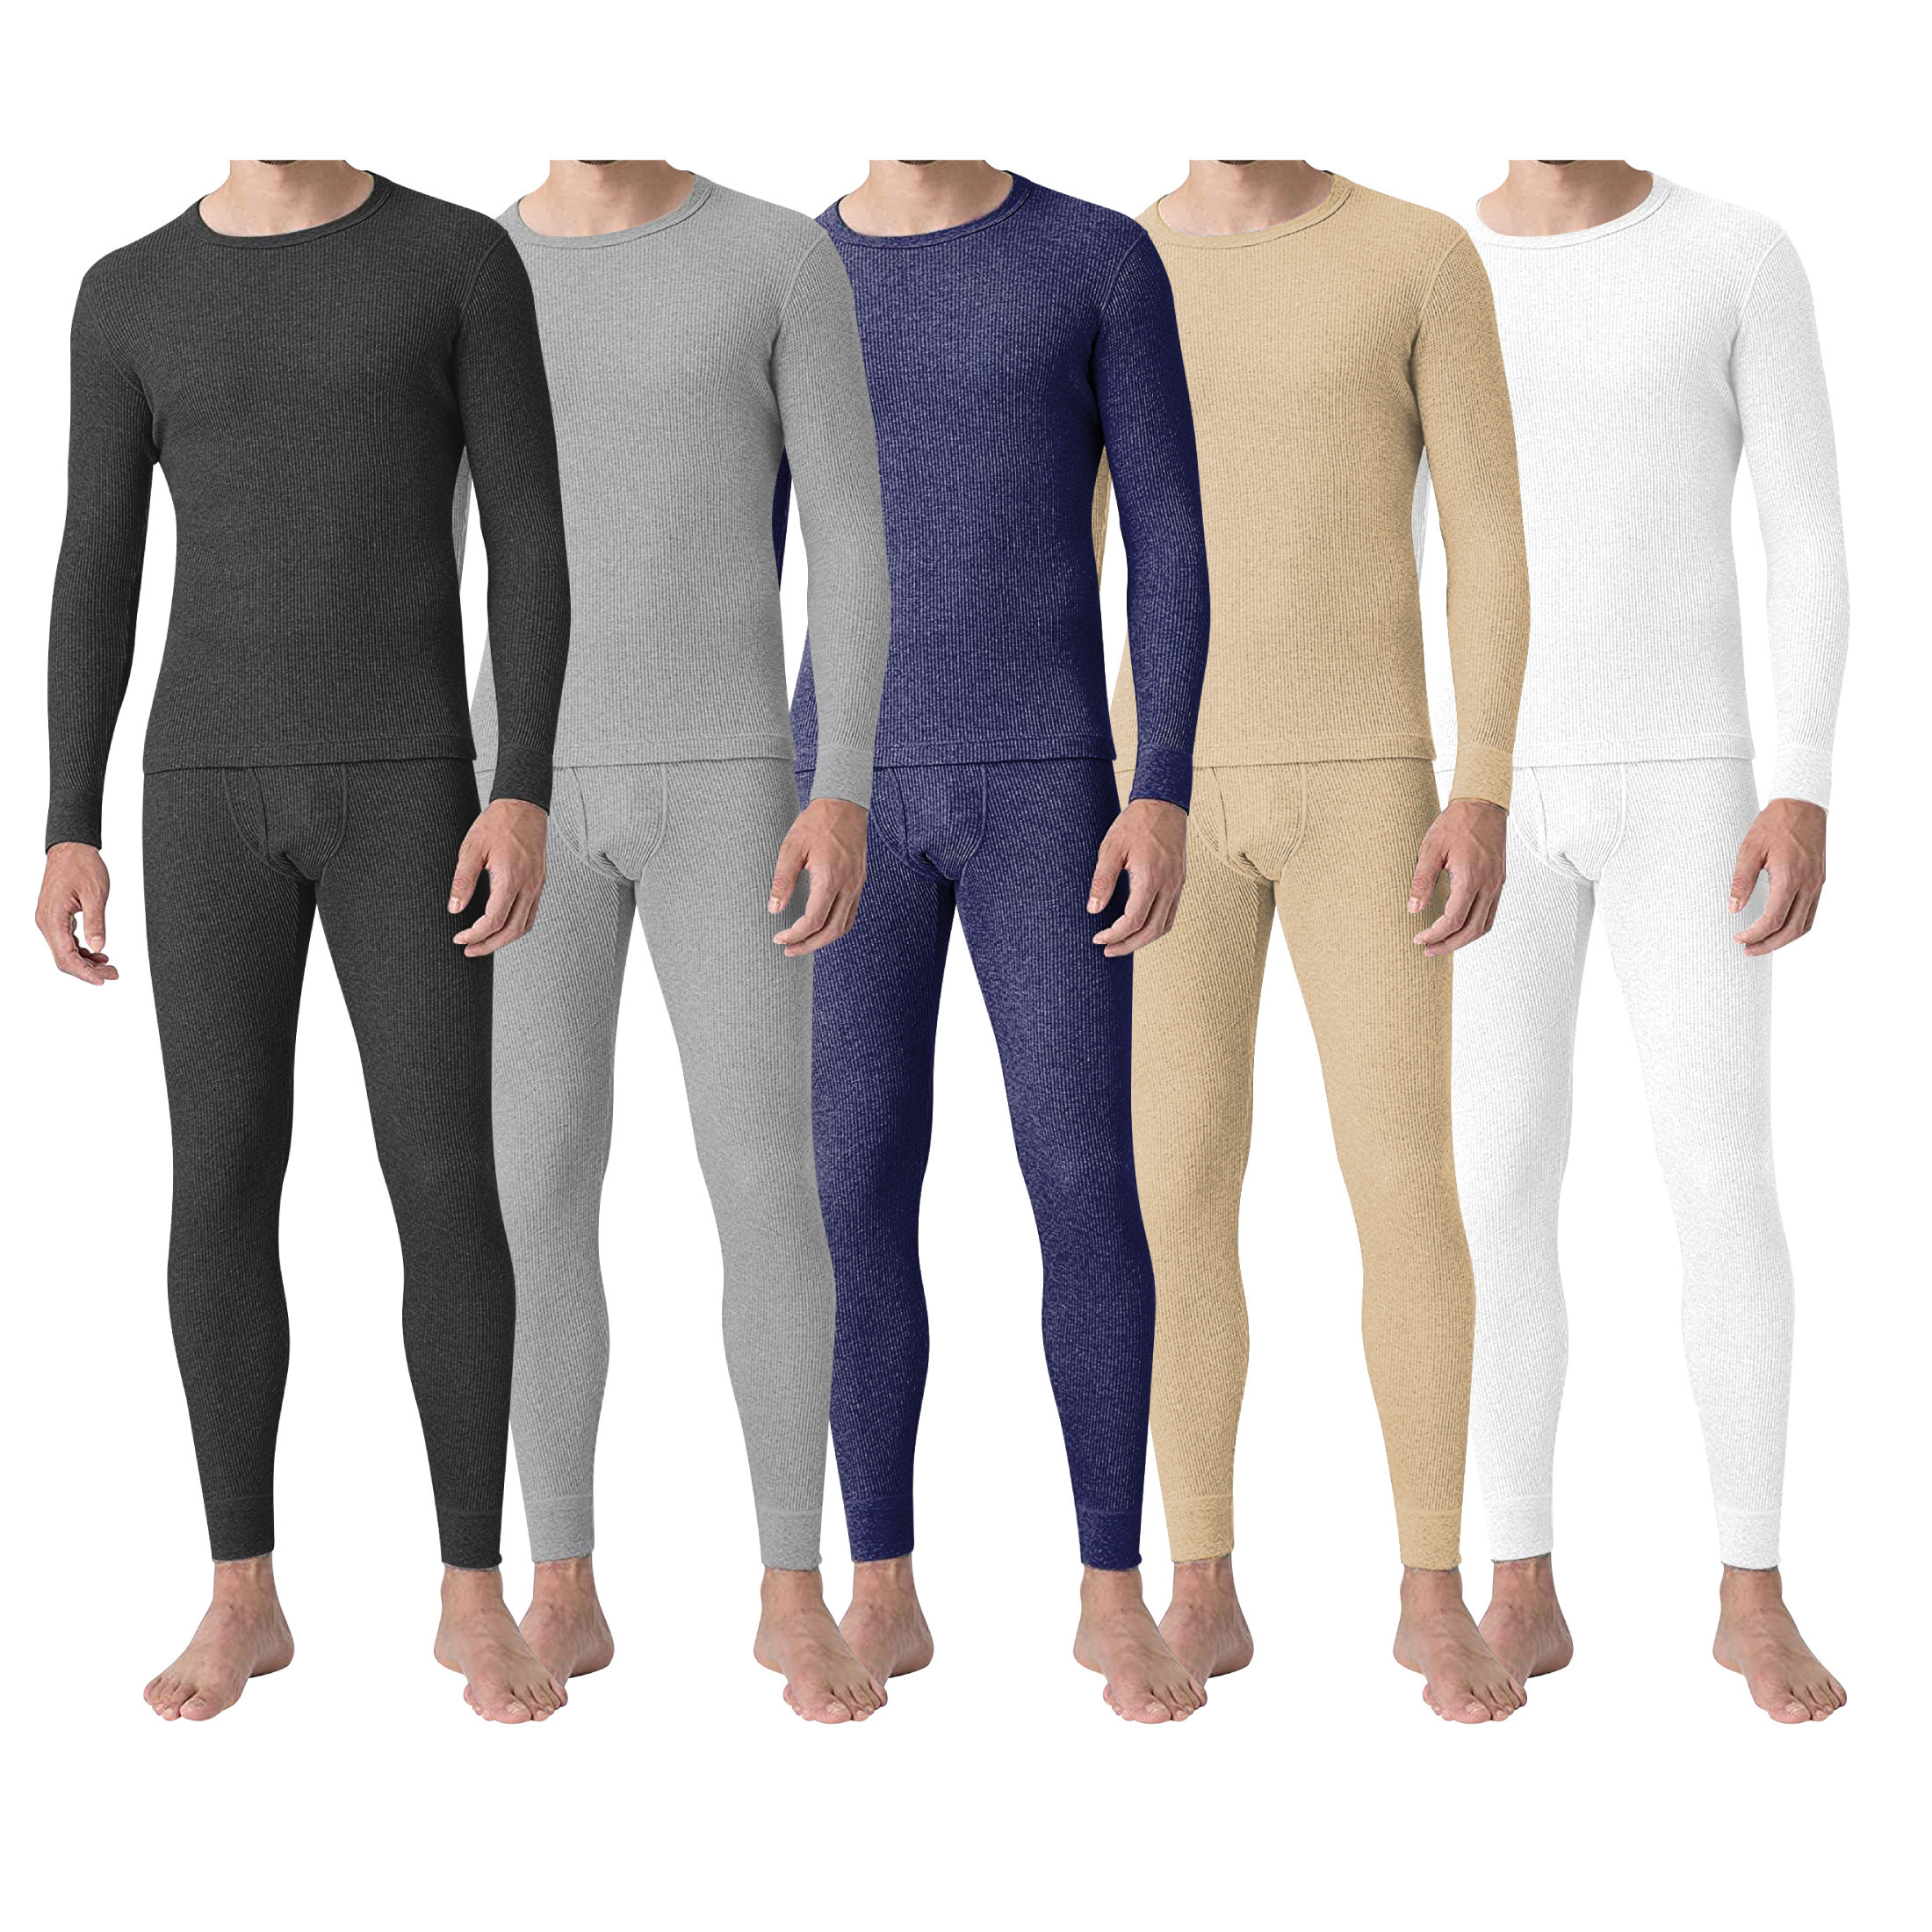 2-Piece: Men's Super Soft Cotton Waffle Knit Winter Thermal Underwear Set - Charcoal, 2X-Large